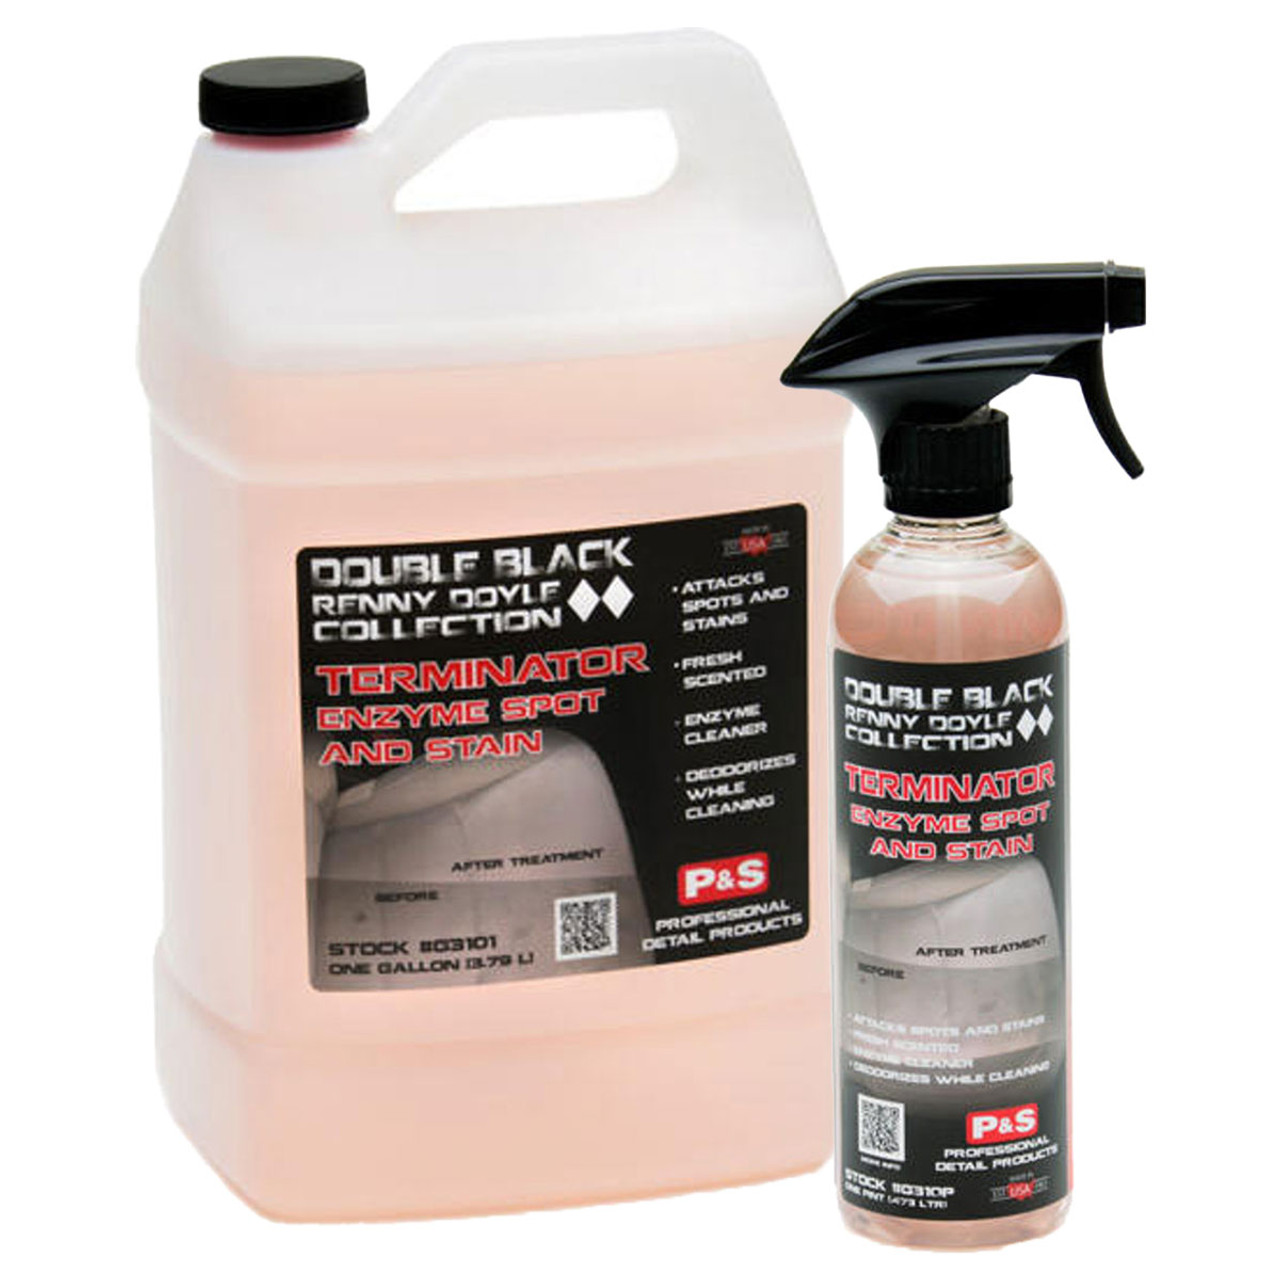 Odor Neutralizing Carpet & Upholstery Cleaner - Griot's Garage